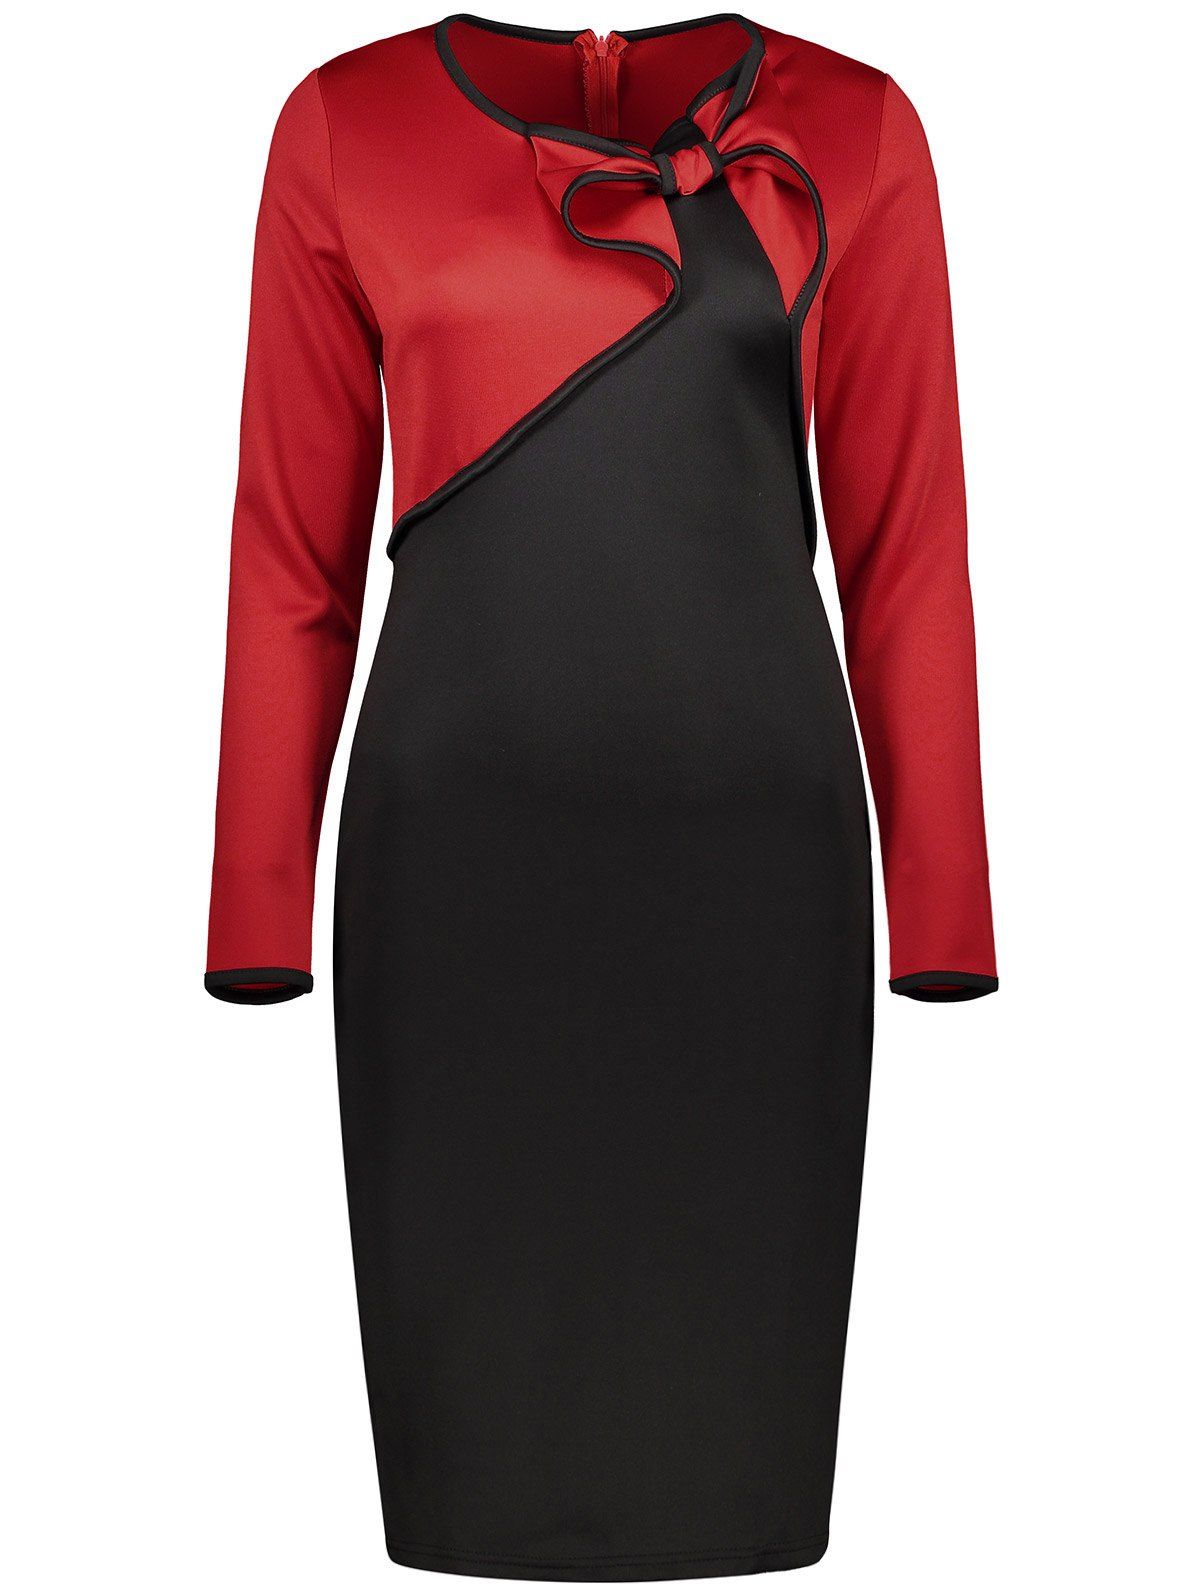 [41% OFF] 2021 Slit Color Block Bodycon Dress In RED | DressLily